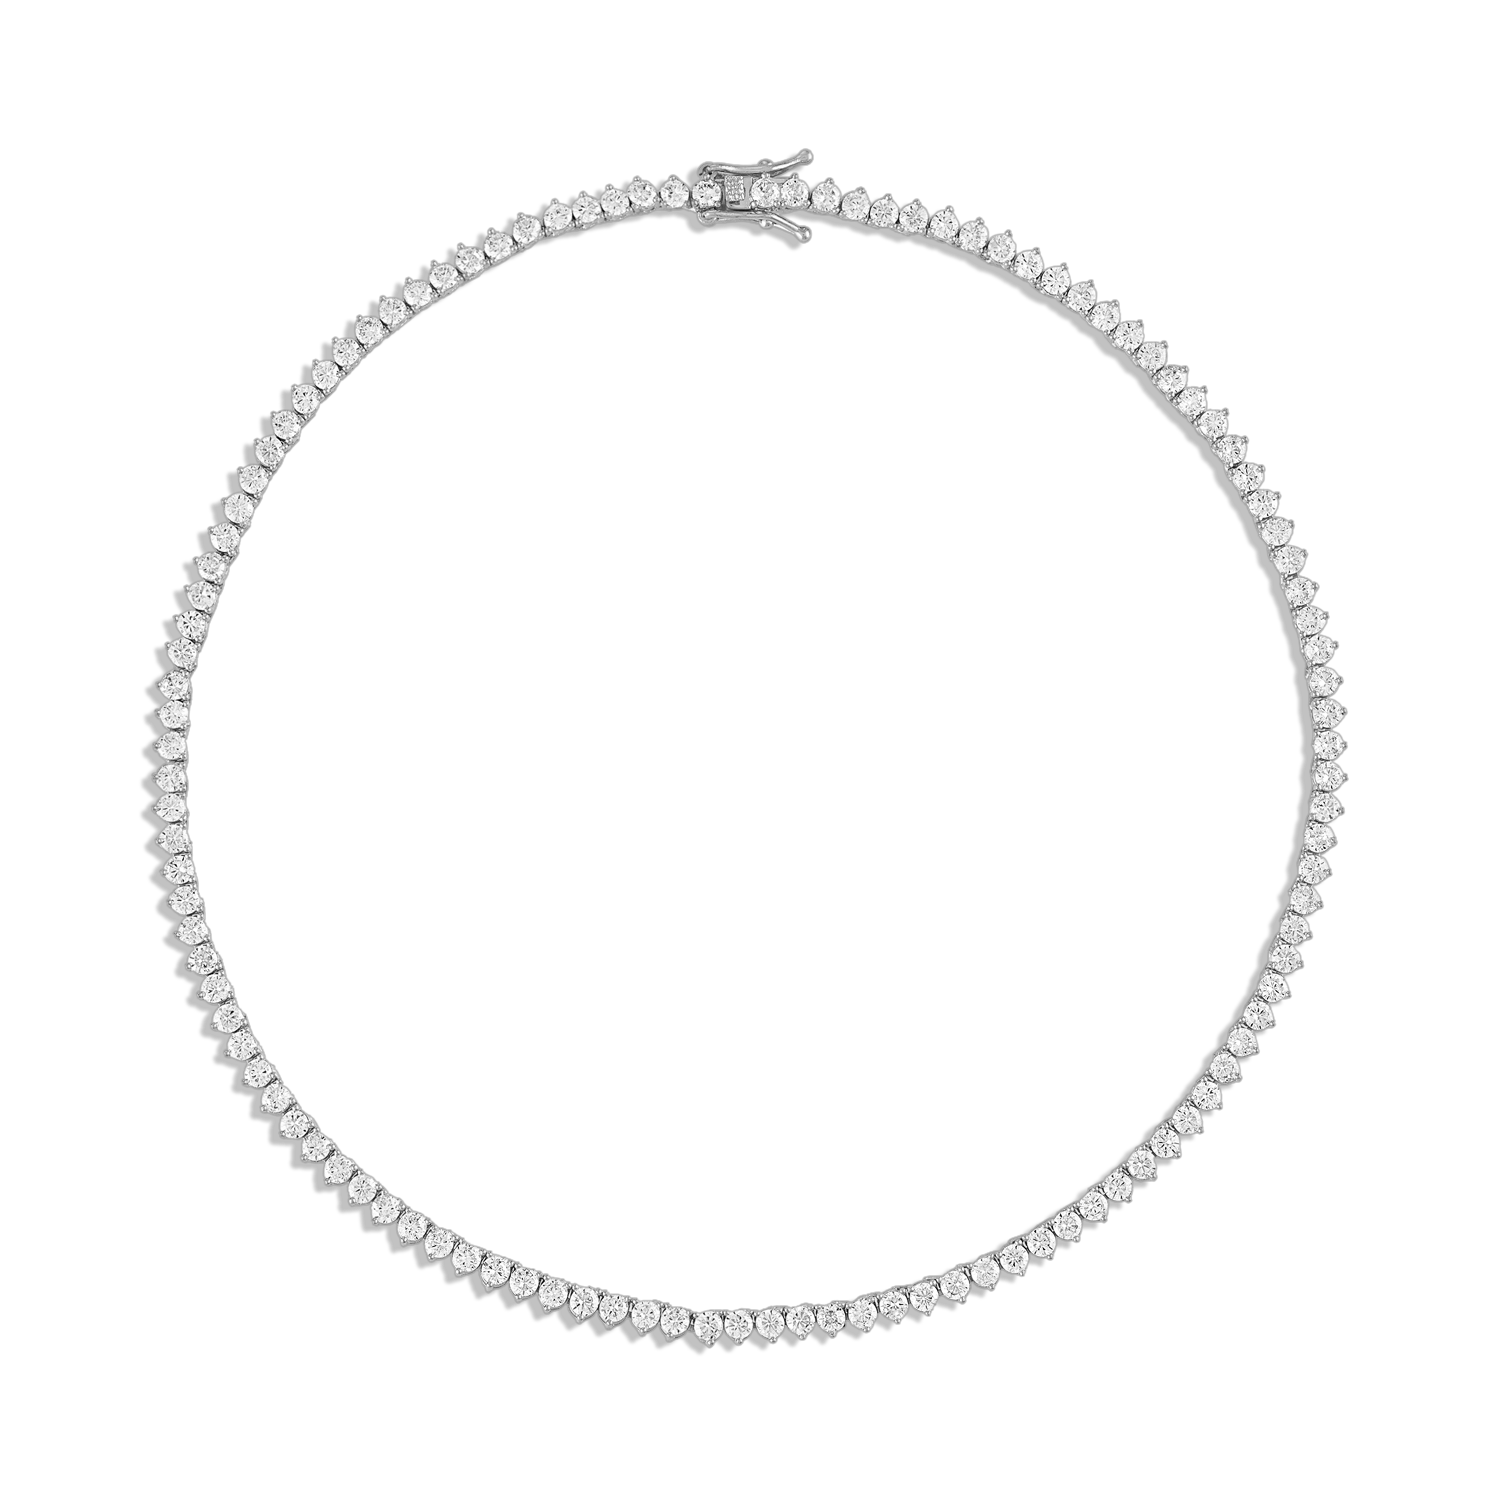 48.95 carat Diamond Wreath Necklace (Platinum) — Shreve, Crump & Low